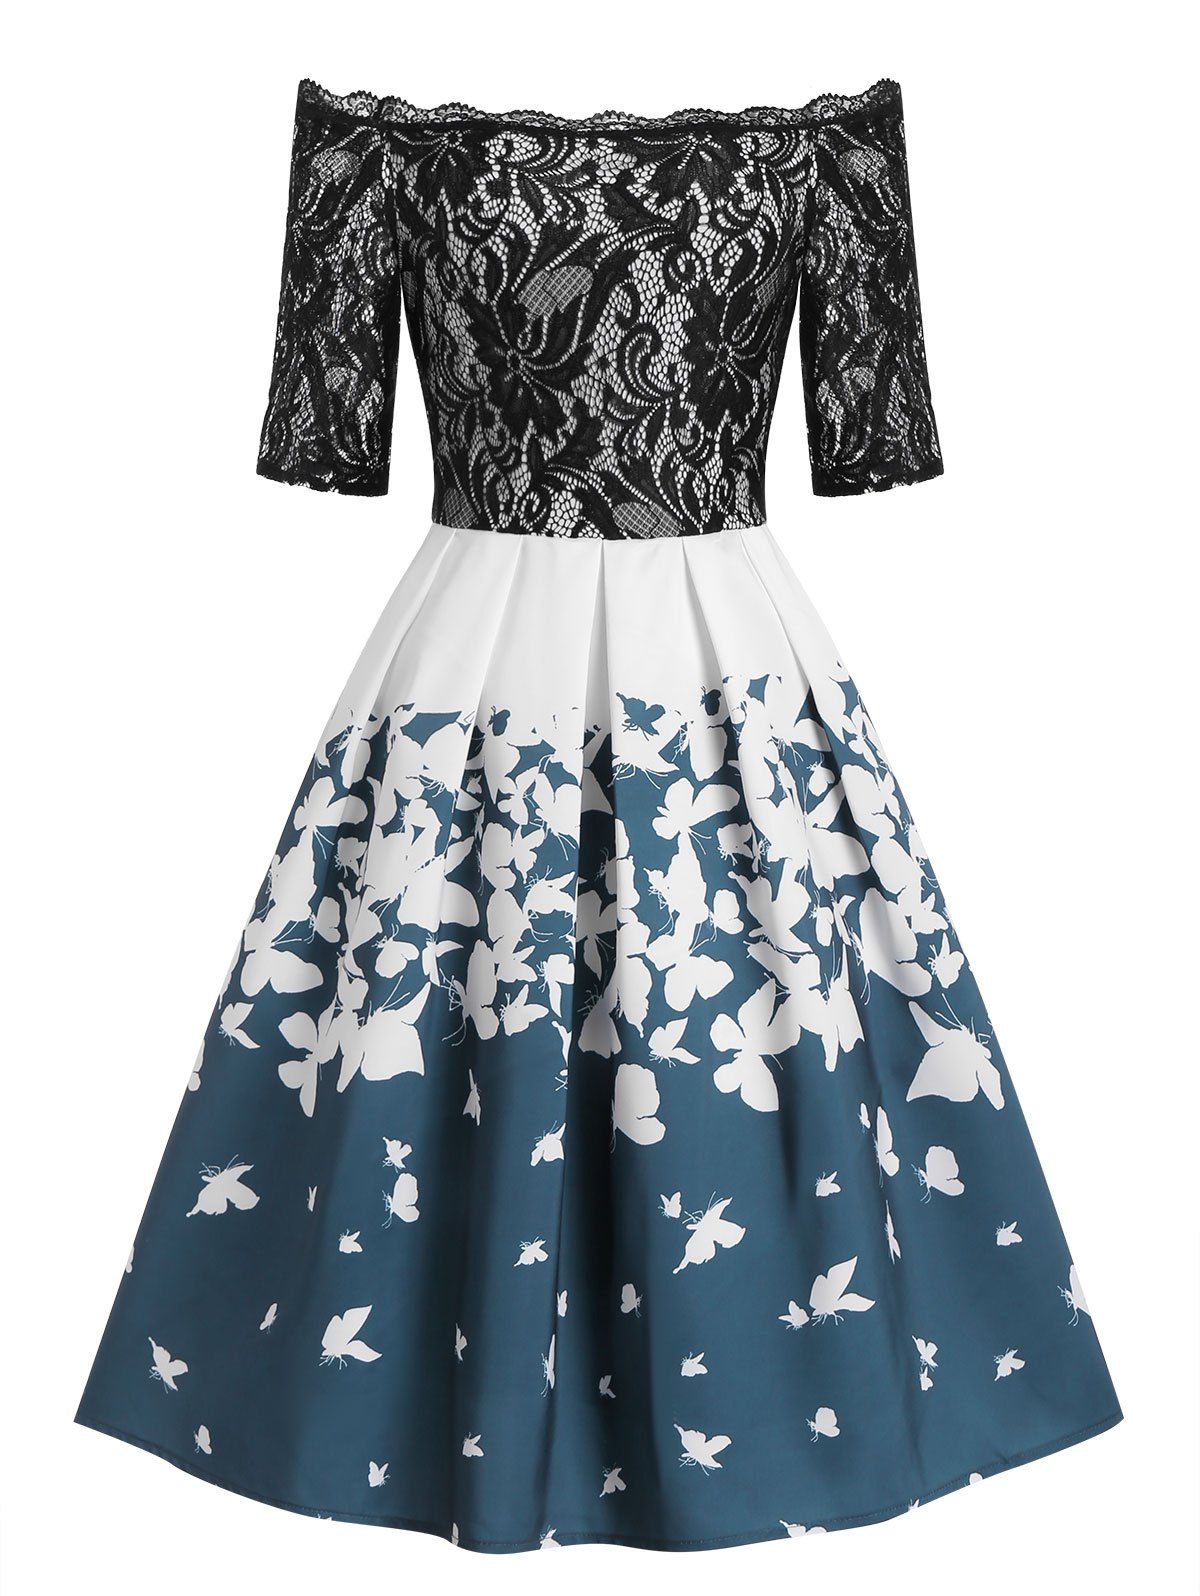 Lace Insert Off Shoulder Butterfly Print Dress - BLUE L